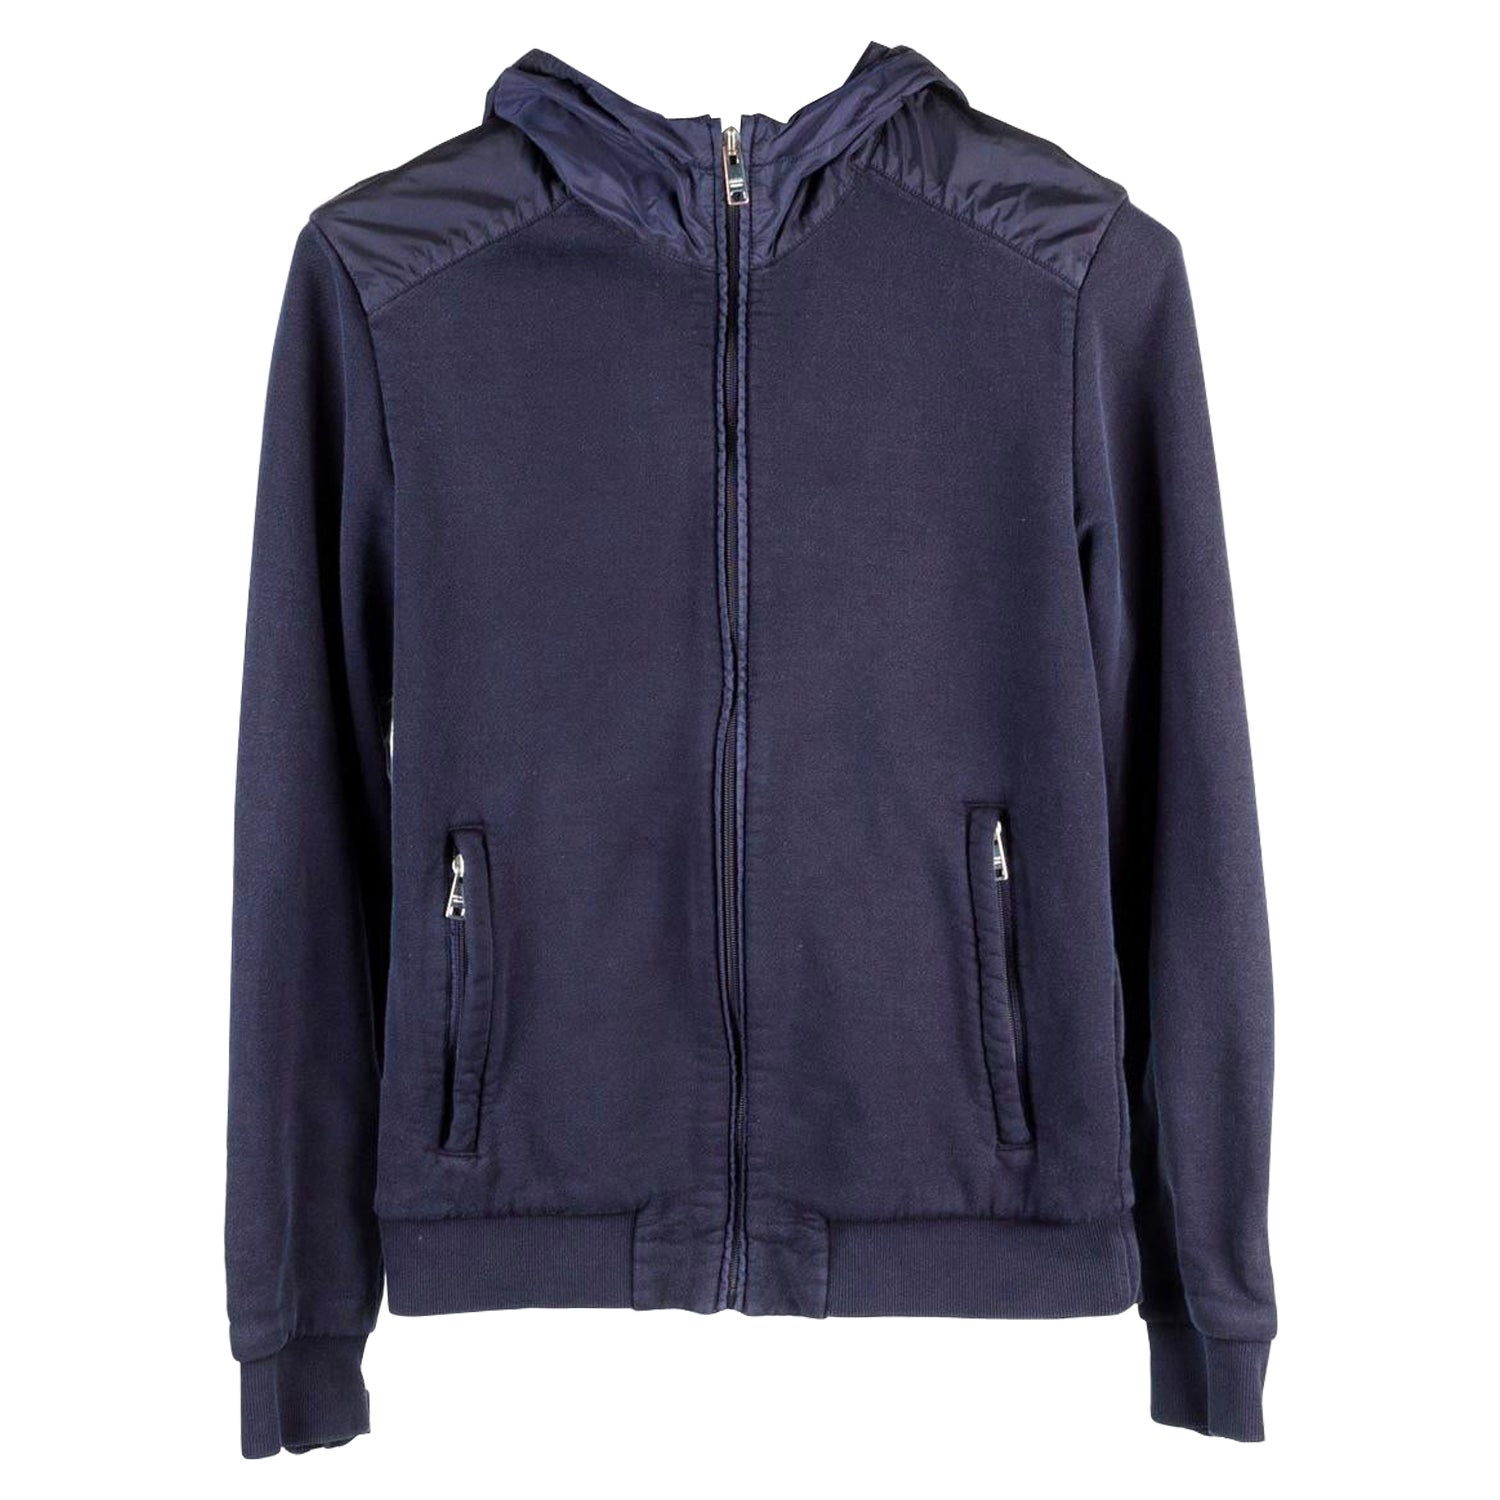  Prada Men Jacket Sweatshirt Light Zipped Hooded Size M, S662 For Sale